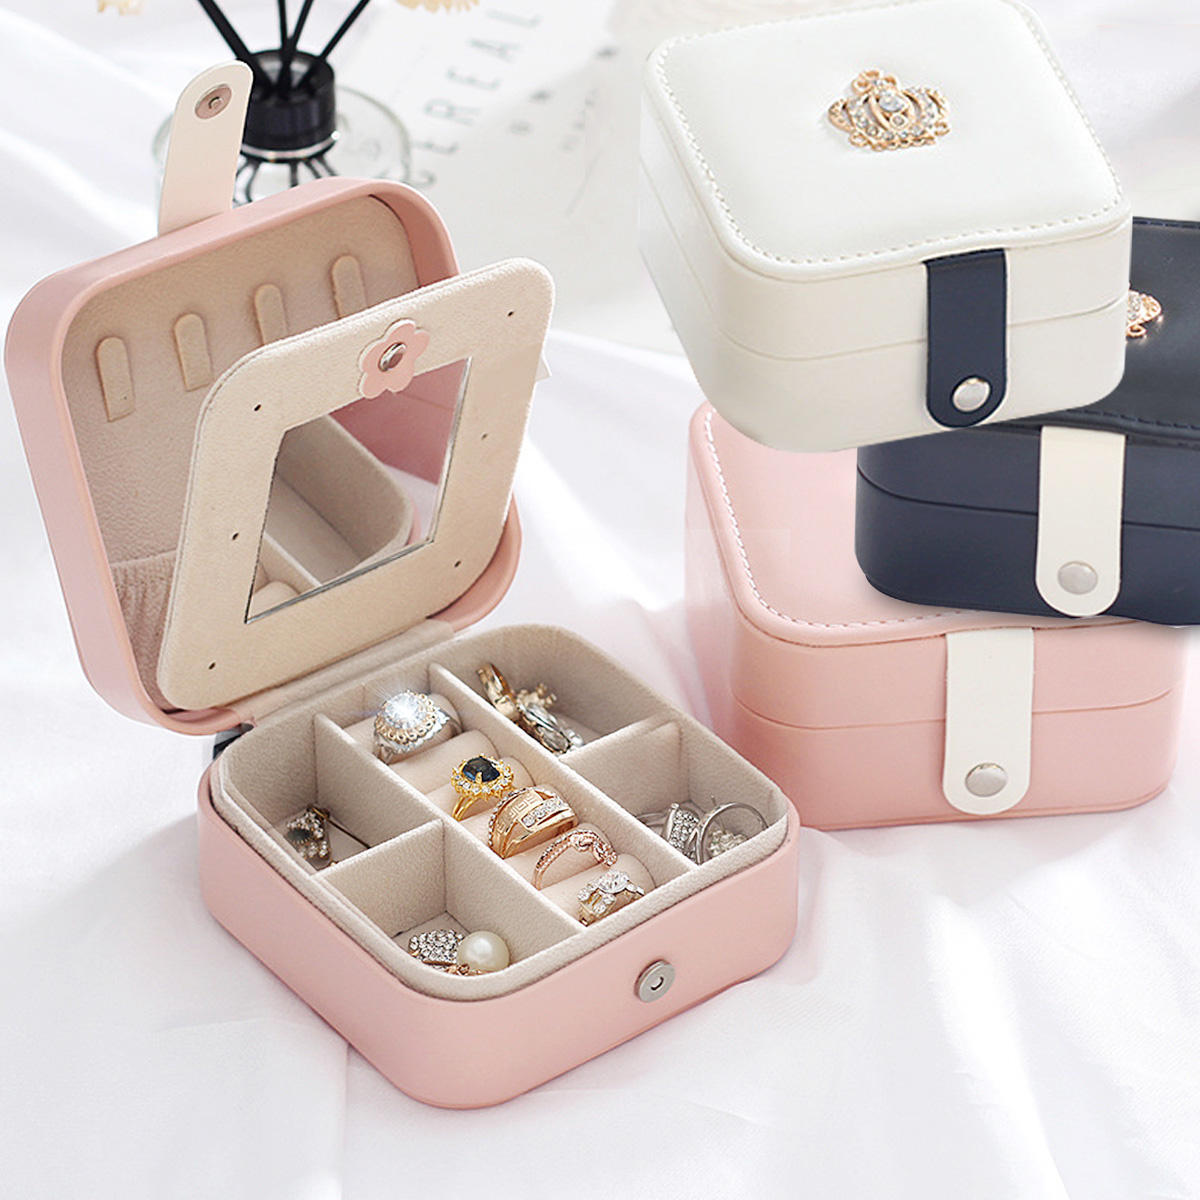 Portable Travel Jewelry Box Organizer Leather Jewellery Ornaments Case Storage